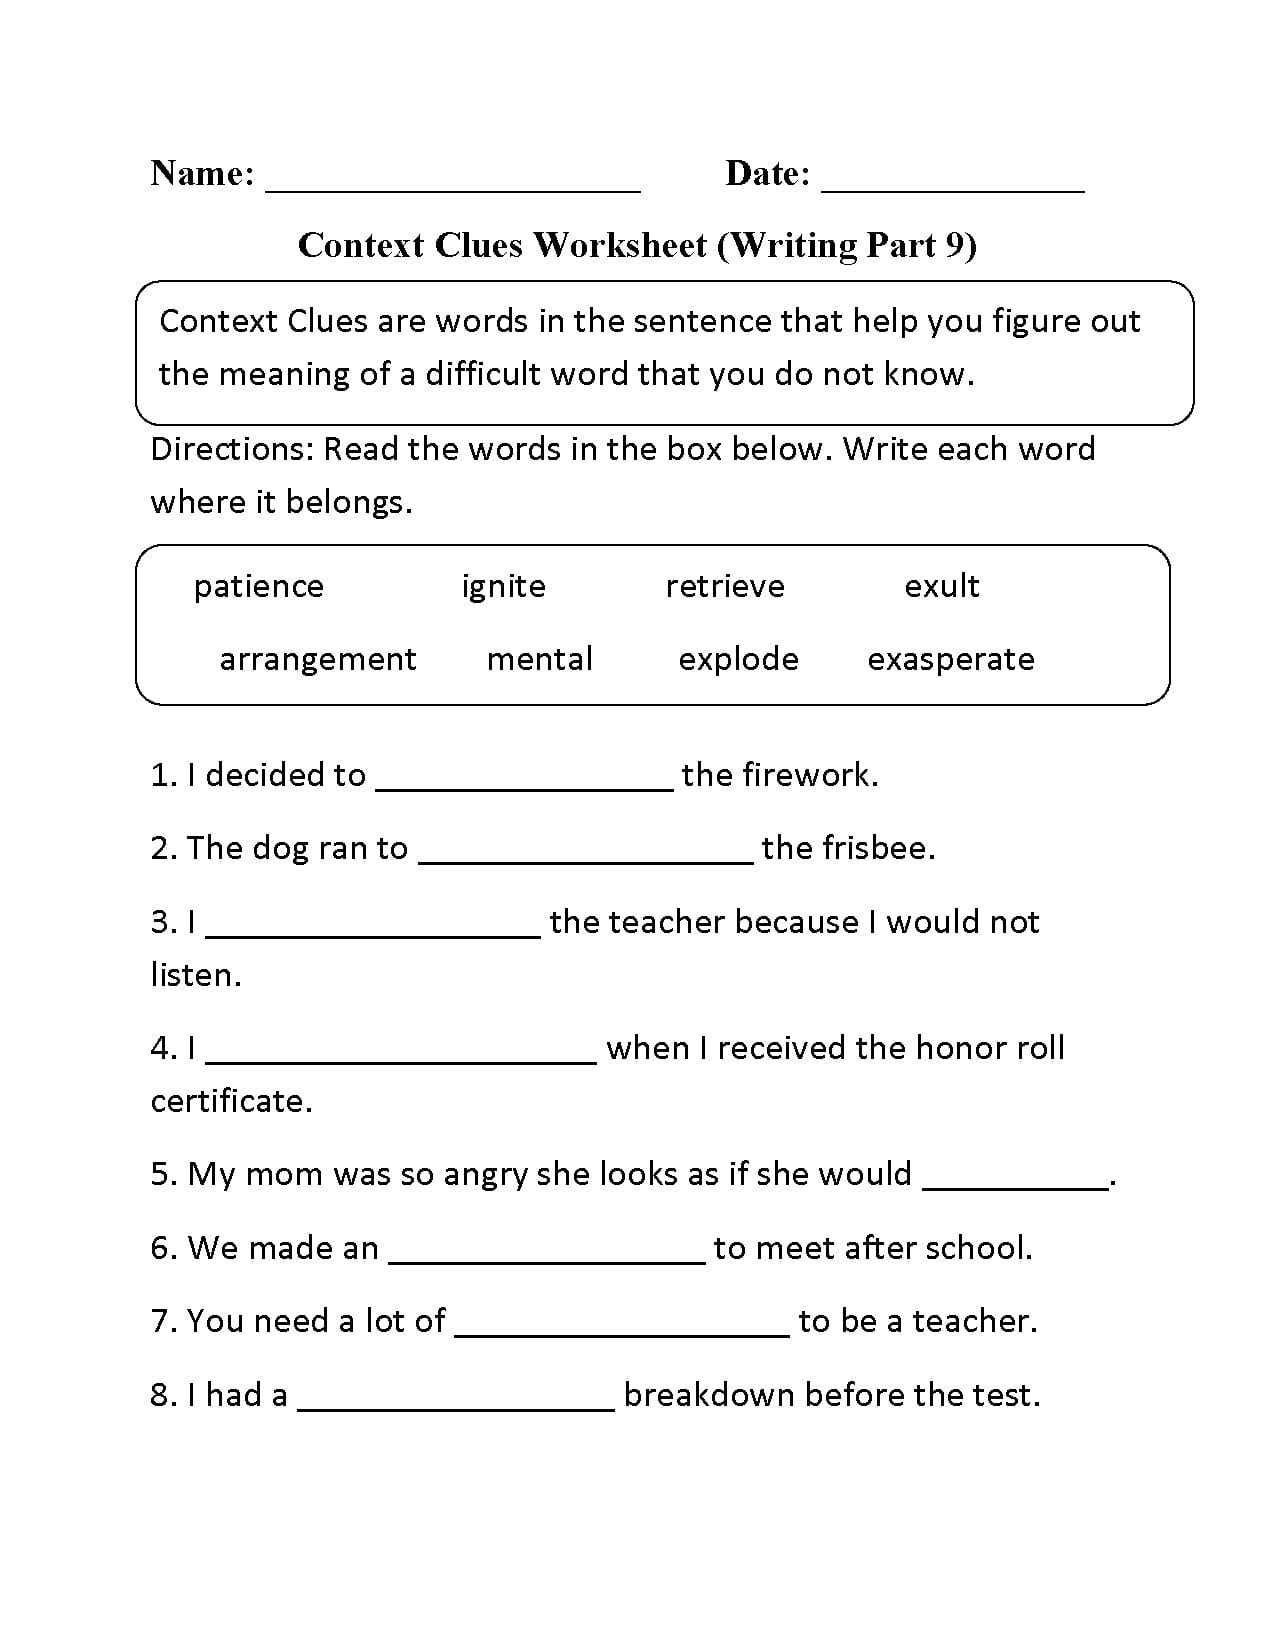 Englishlinx  Context Clues Worksheets Along With Context Clues Worksheets High School